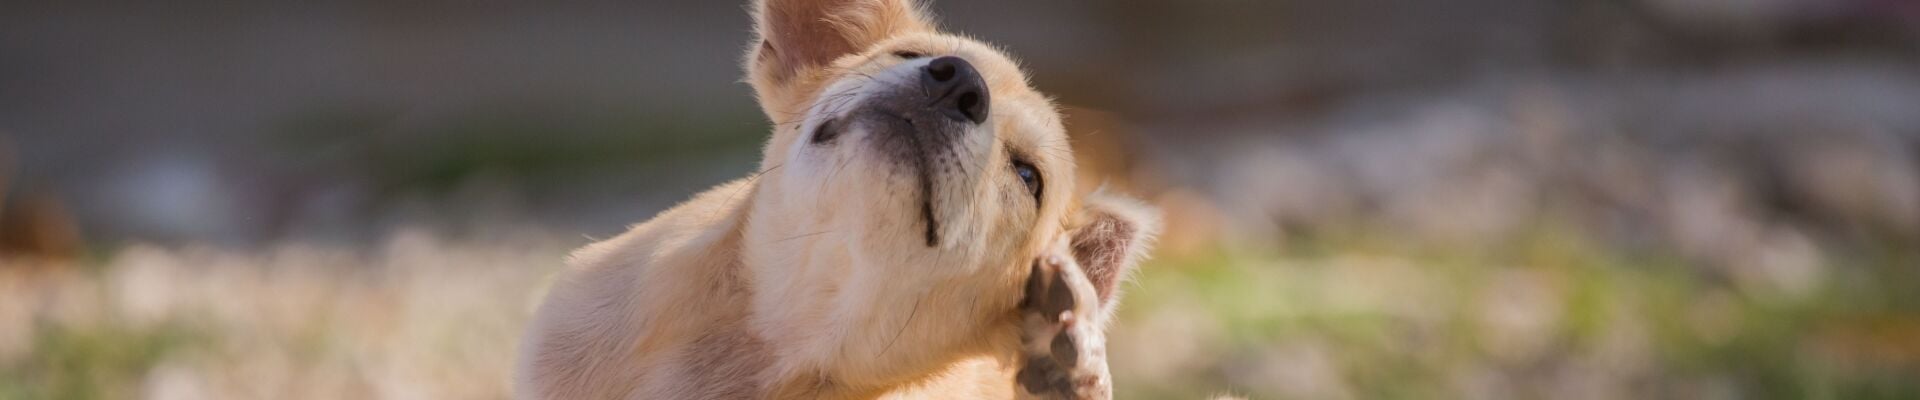 Un cachorro golden retriever rascándose una oreja